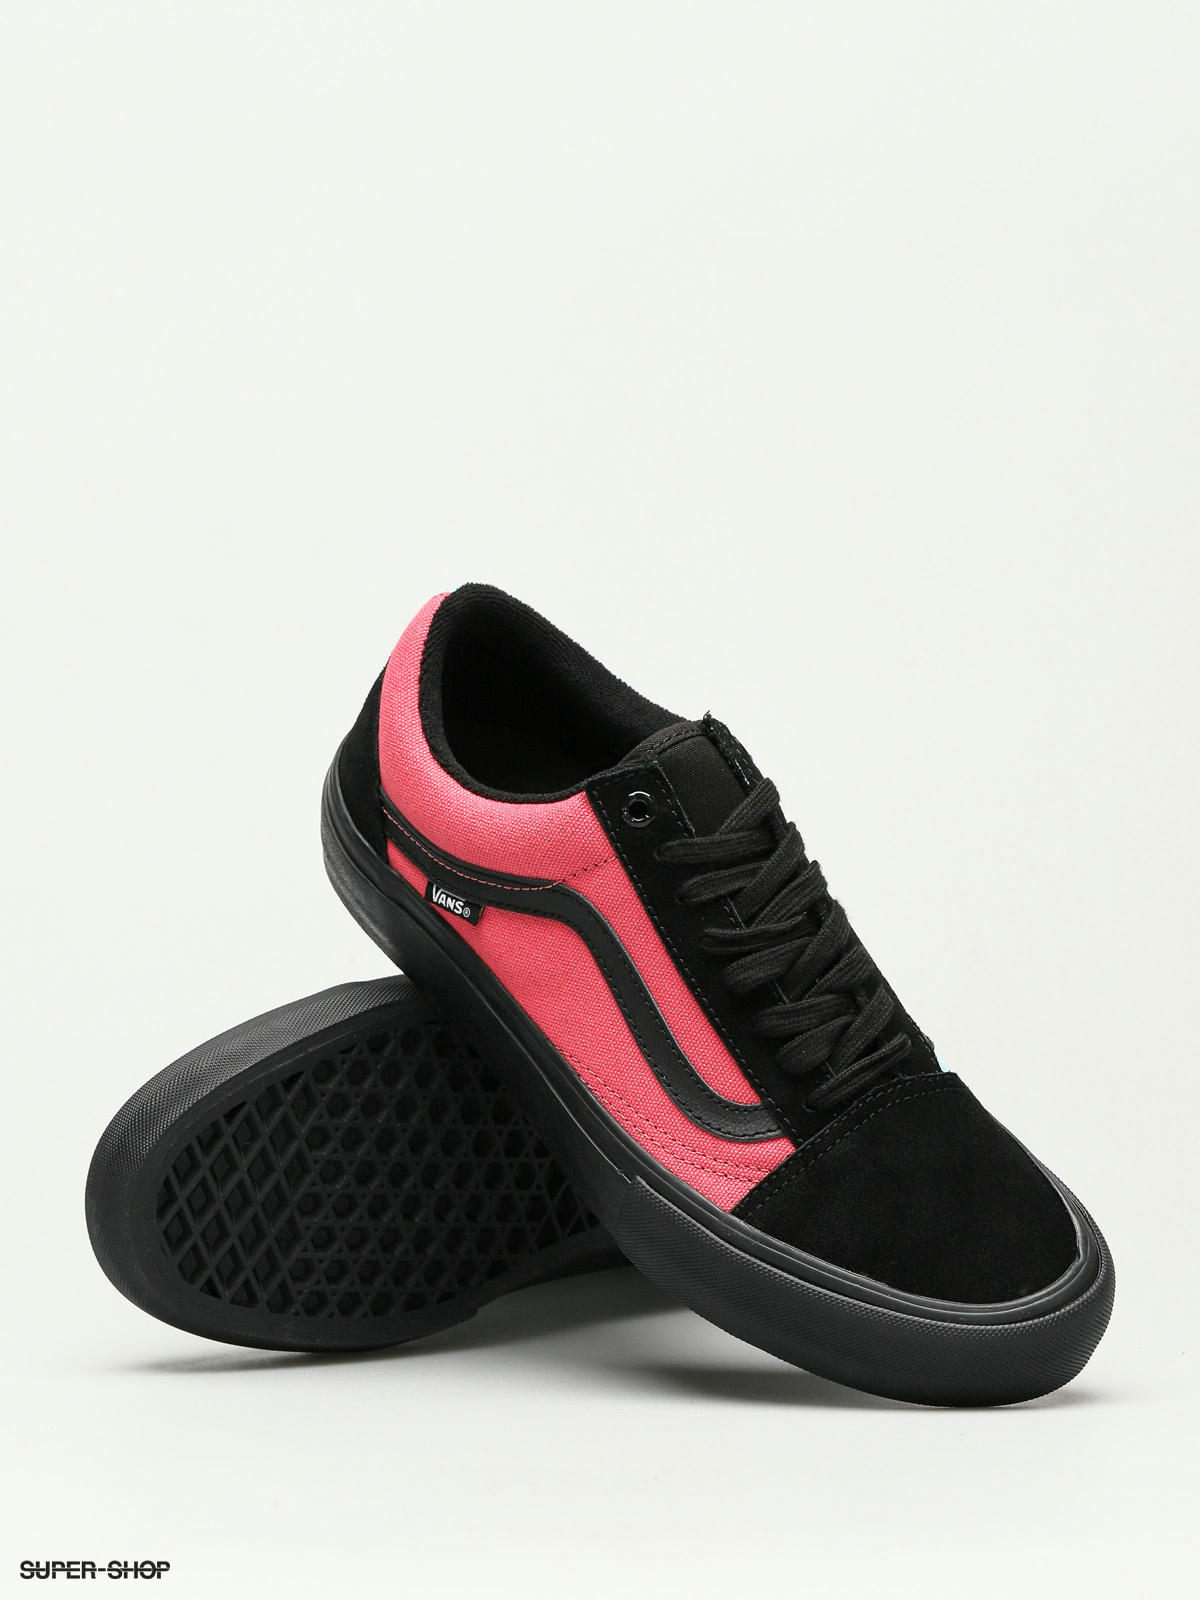 vans old skool pro asymmetrical black pink & blue skate shoes